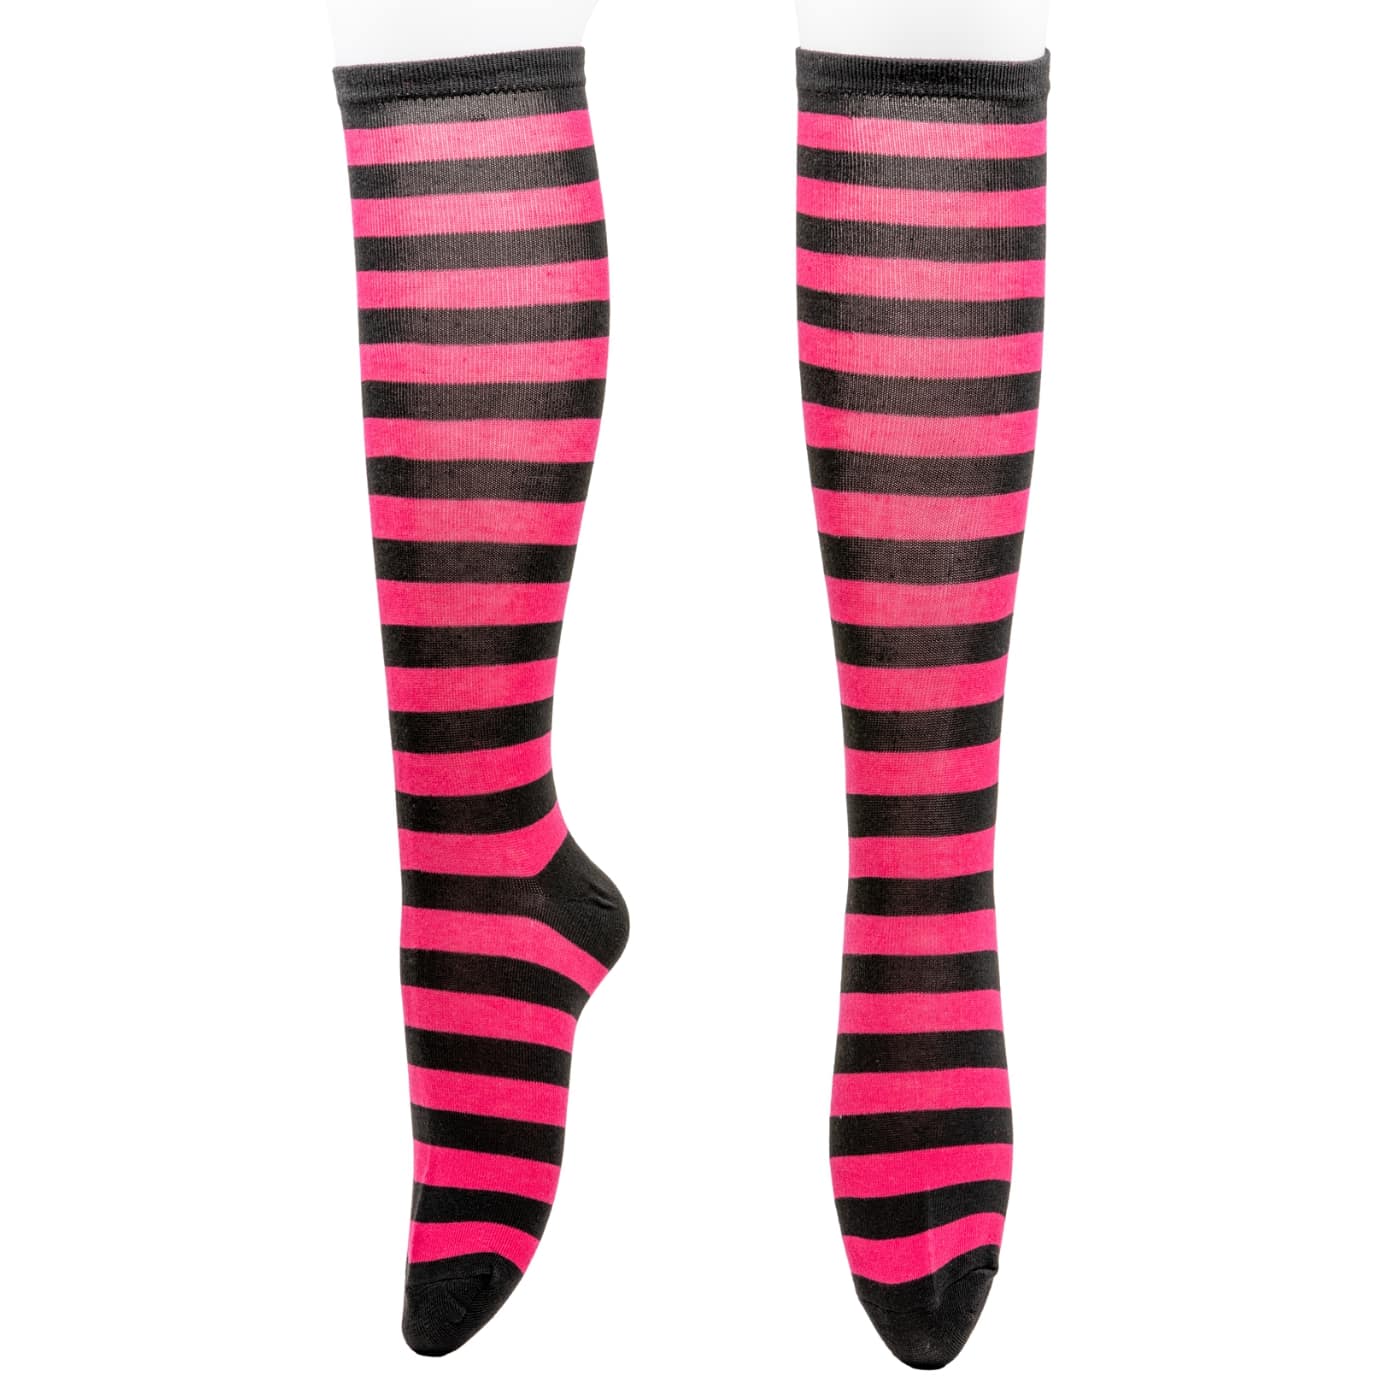 Black & Pink Stripe Knee High Socks by RainbowsAndFairies.com.au (Stripe Long Socks - Rainbow - Stockings - Colourful Socks - Vintage Inspired) - SKU: FW_SOCKS_STRIPE_BPI - Pic-01